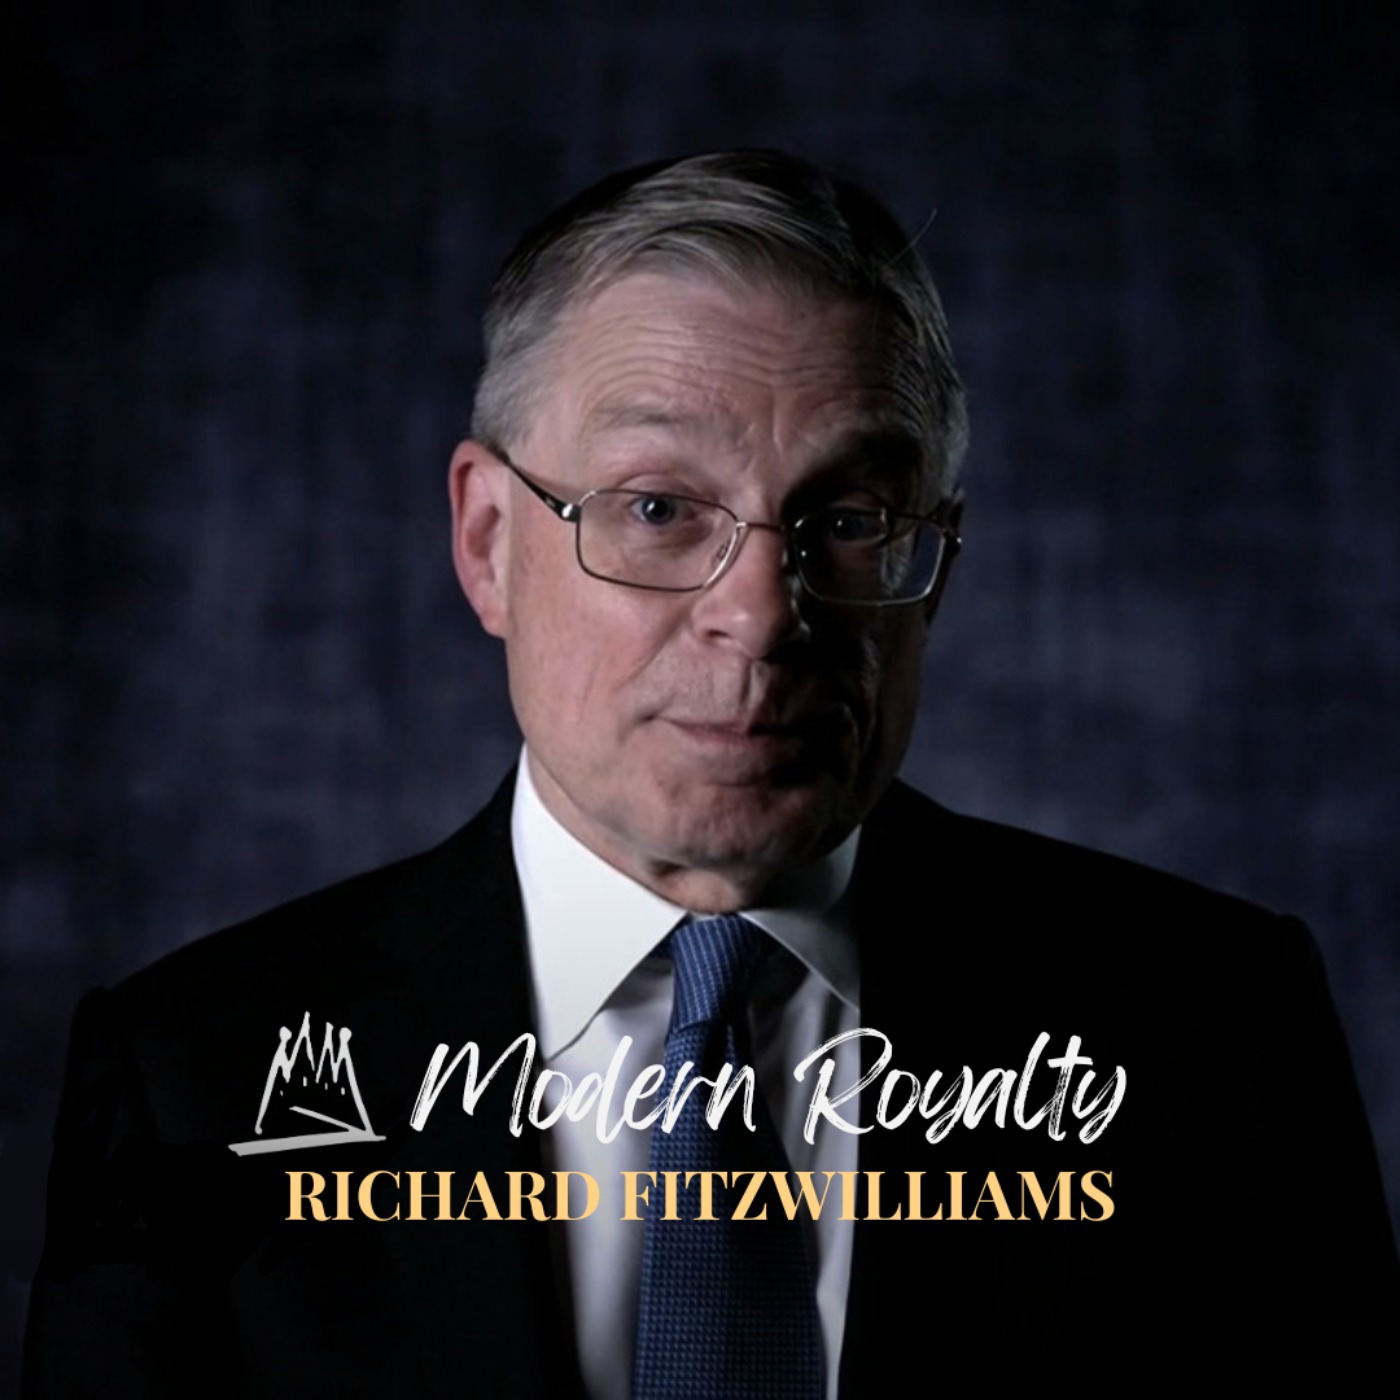 Exploring Royal History: Richard Fitzwilliams on the Modern Royalty Podcast